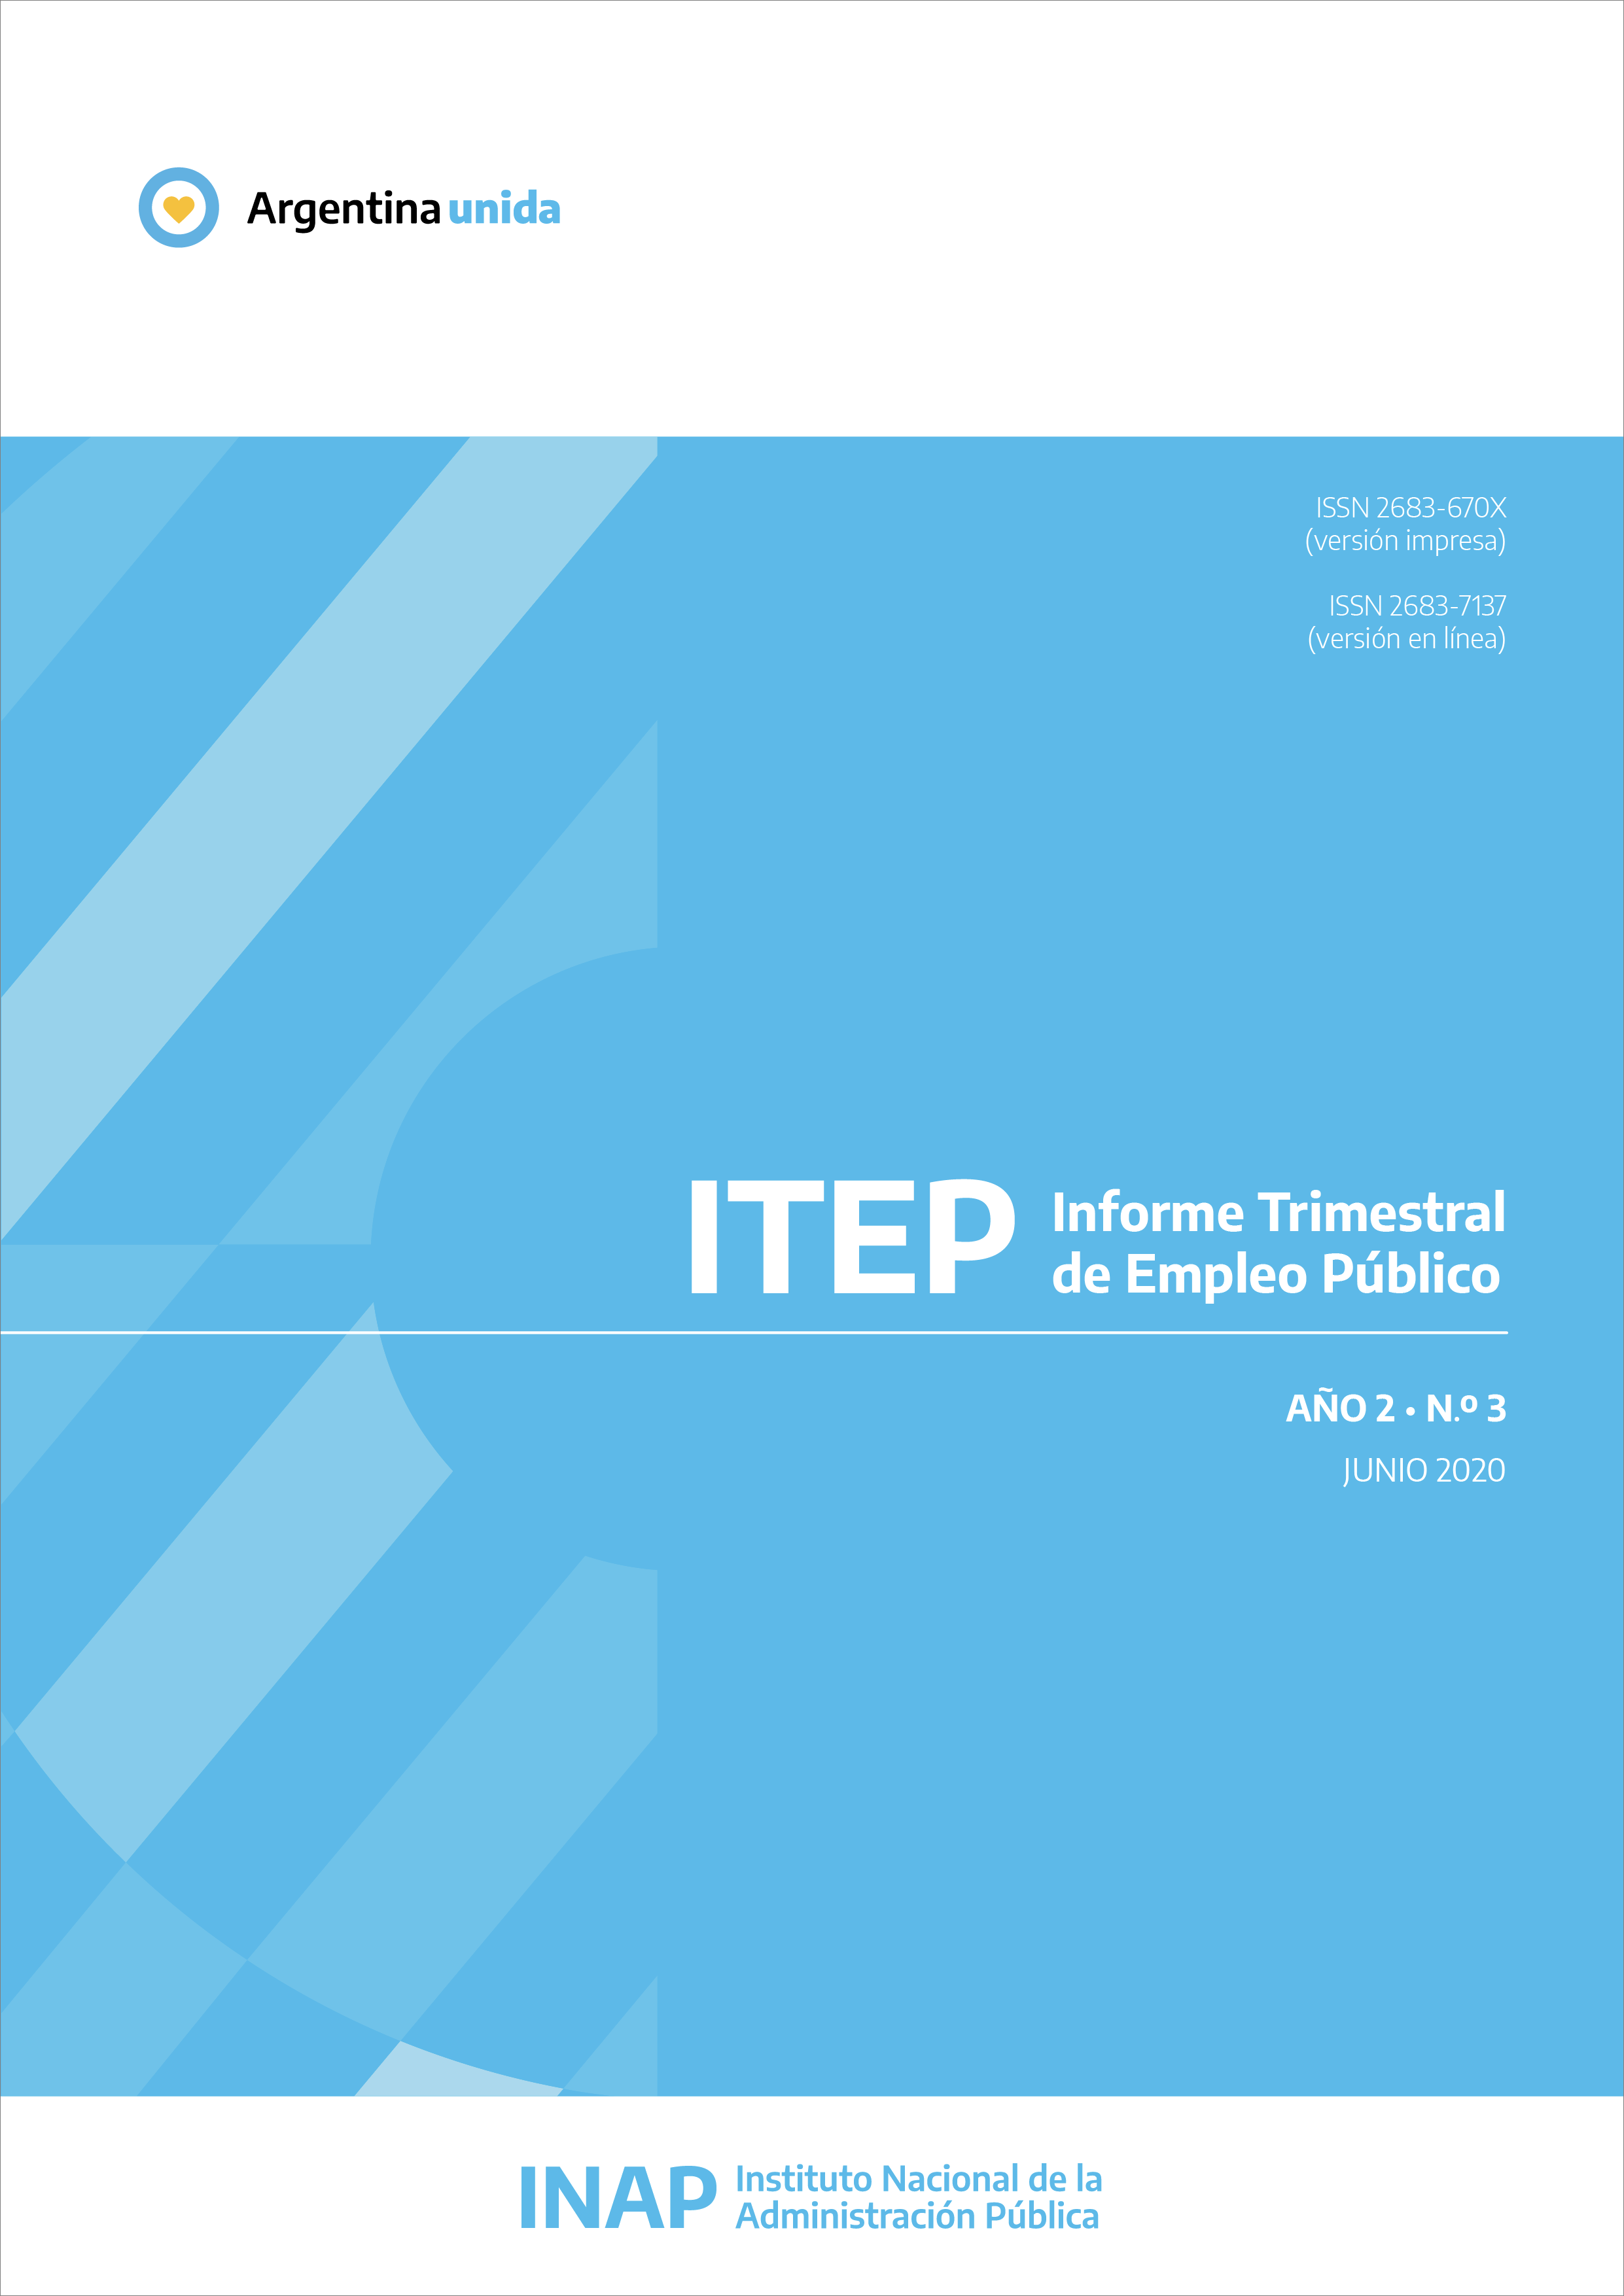 Imagen de la tapa del ITEP volumen 2